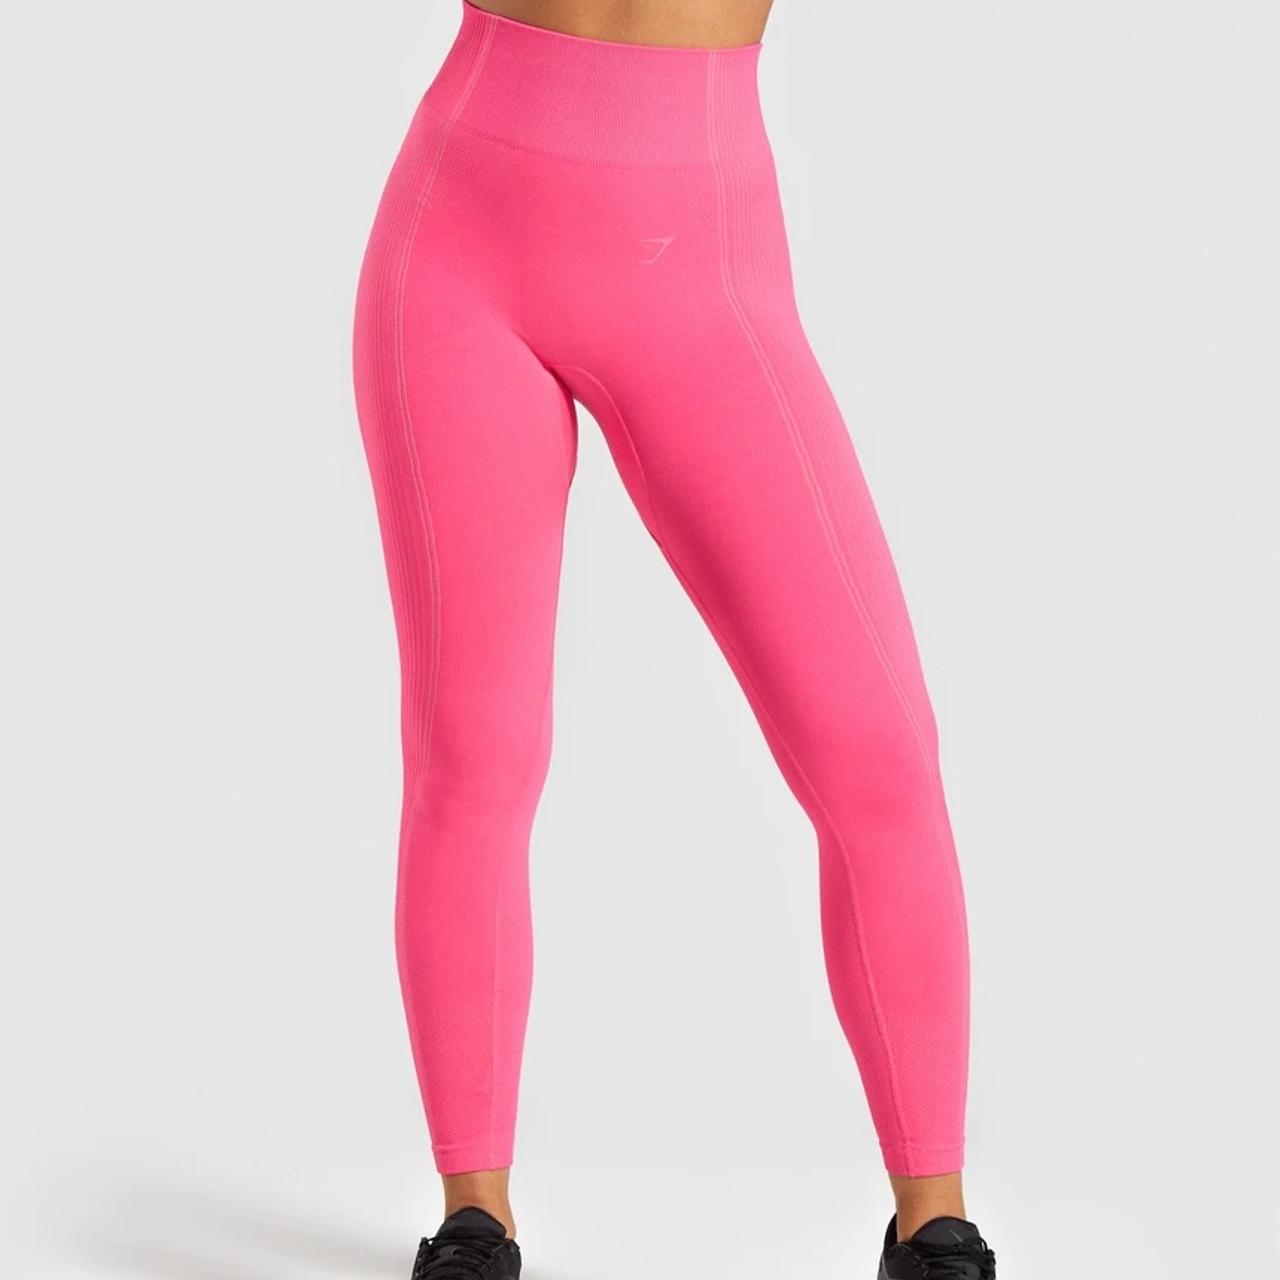 GYMSHARK pink seamless workout leggings model - Depop